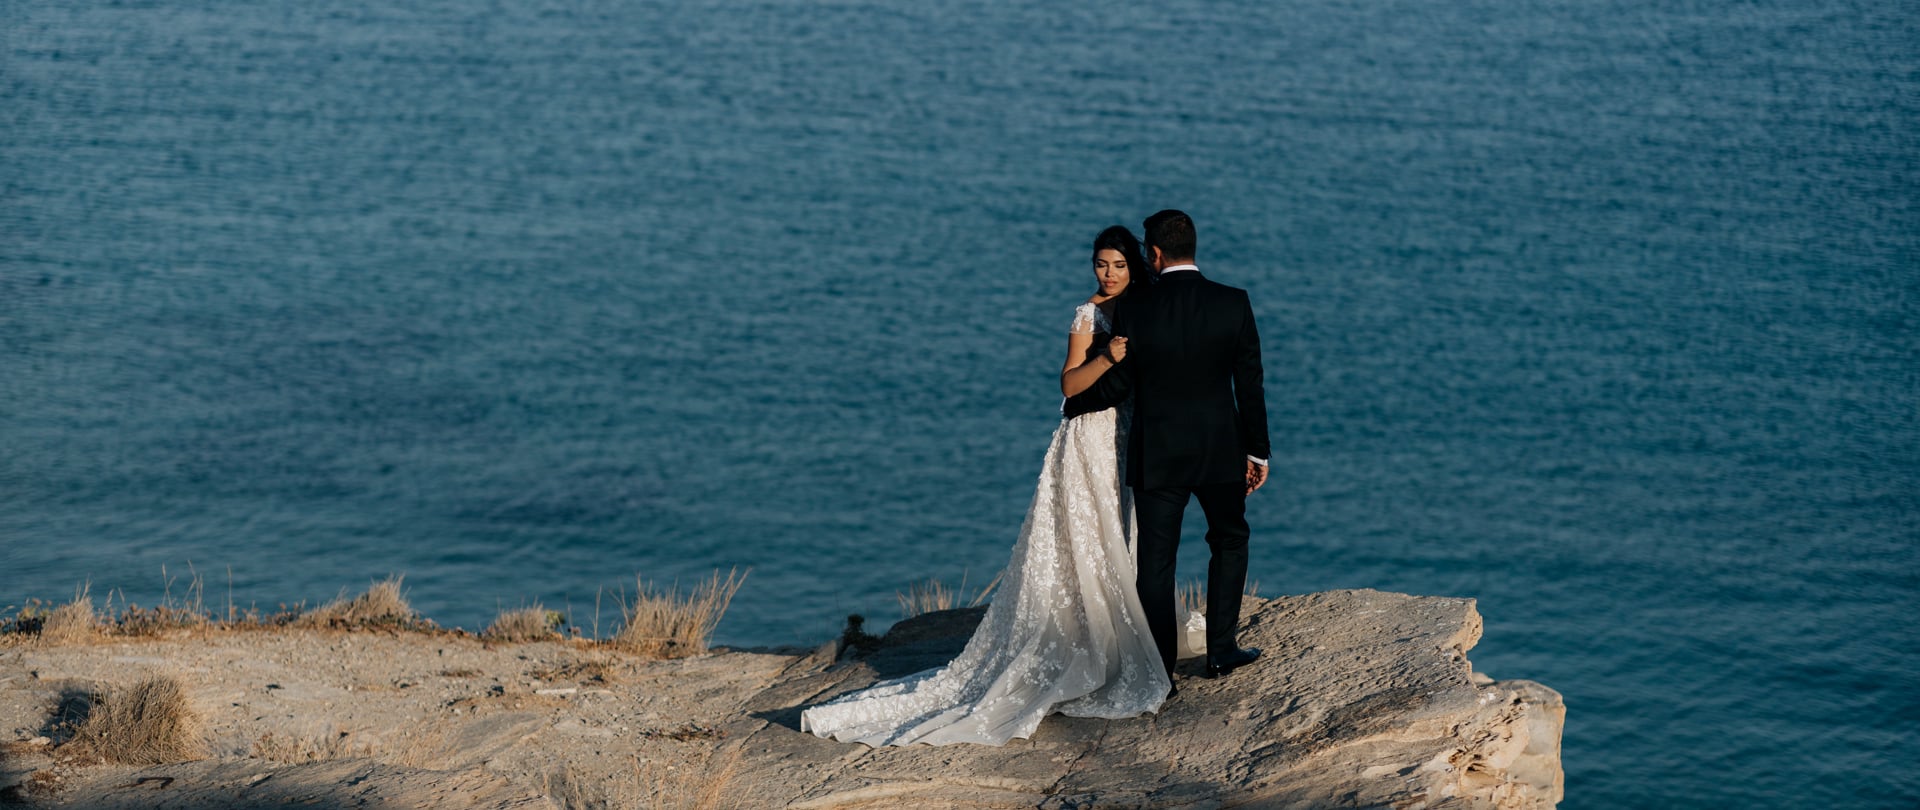 Maryed & Nick Wedding Video Filmed atParos,Greece